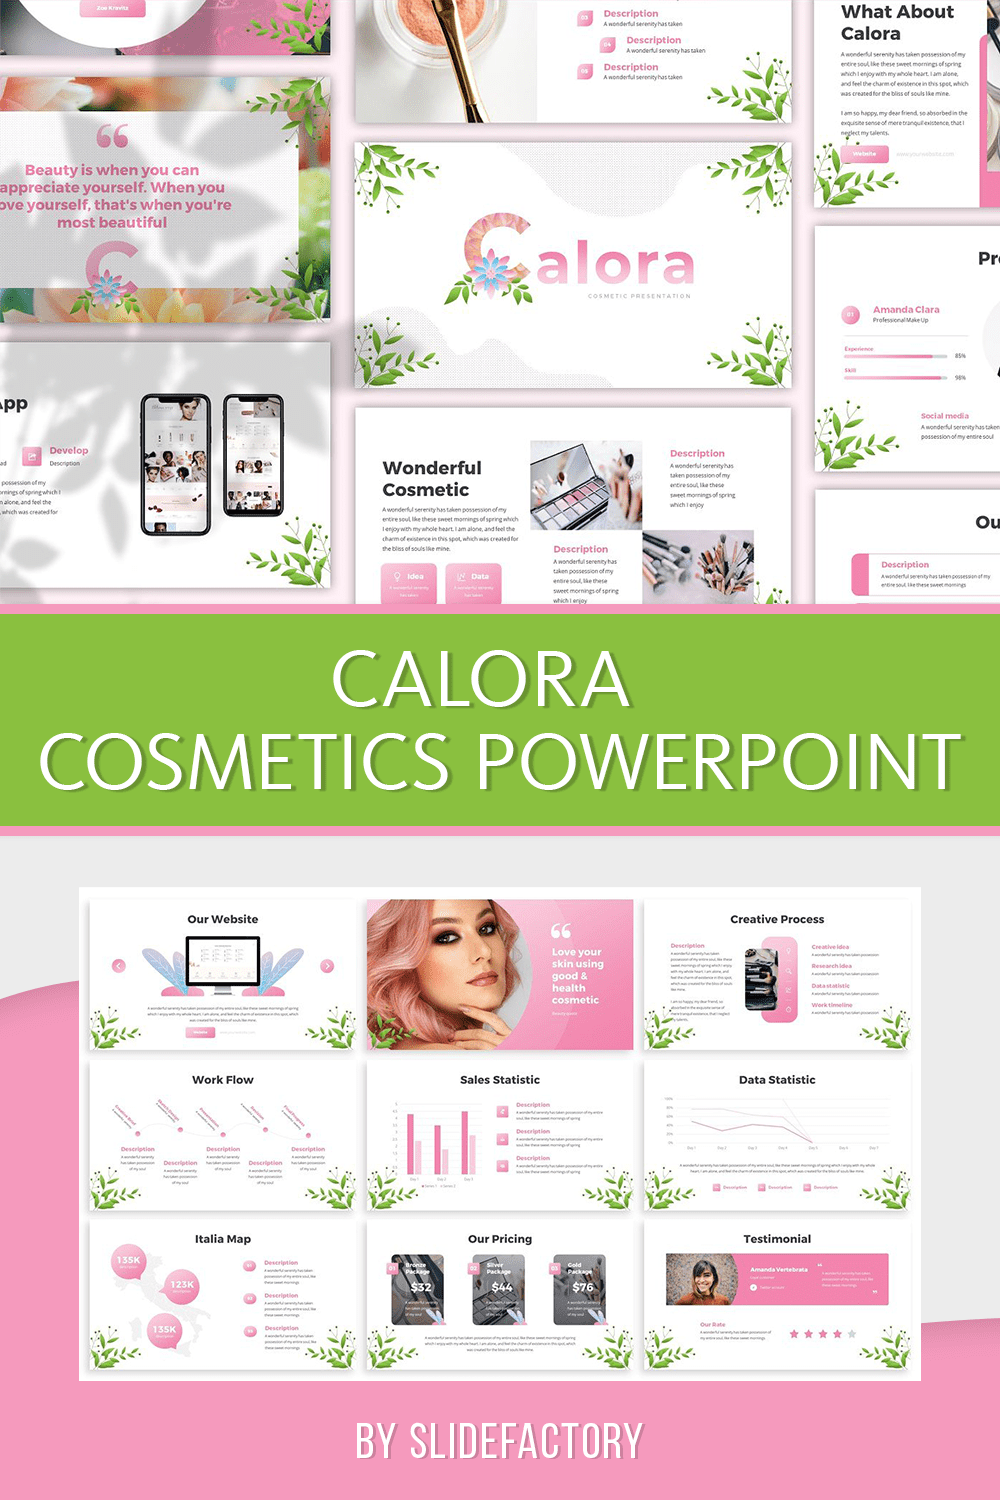 Calora - Cosmetics PowerPoint pinterest image.